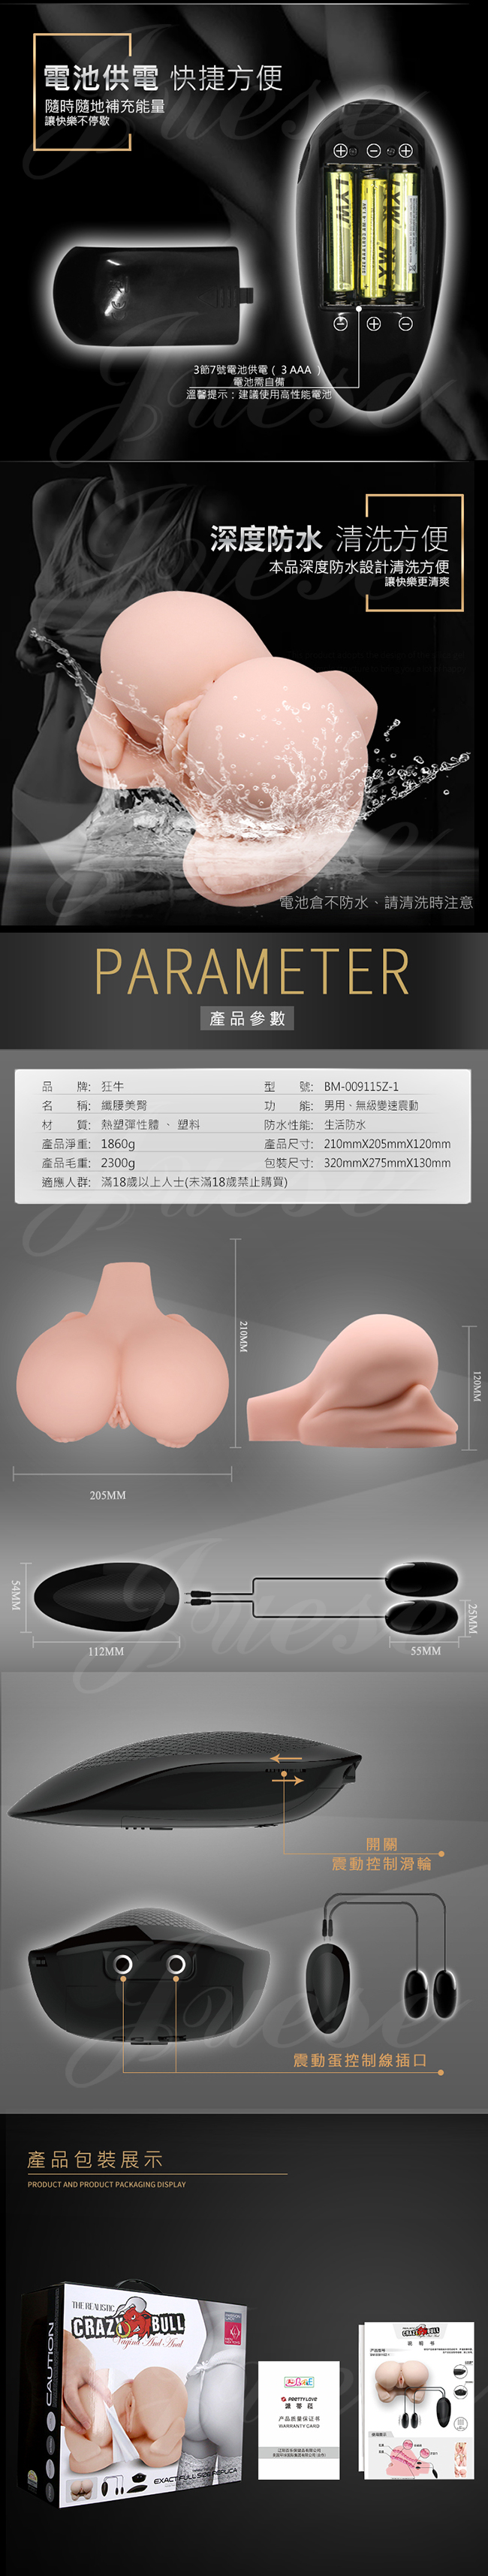 CARZY BULL-纖腰美臀 3D通道多層褶皺雙穴美臀震動自慰器-附跳蛋(特)